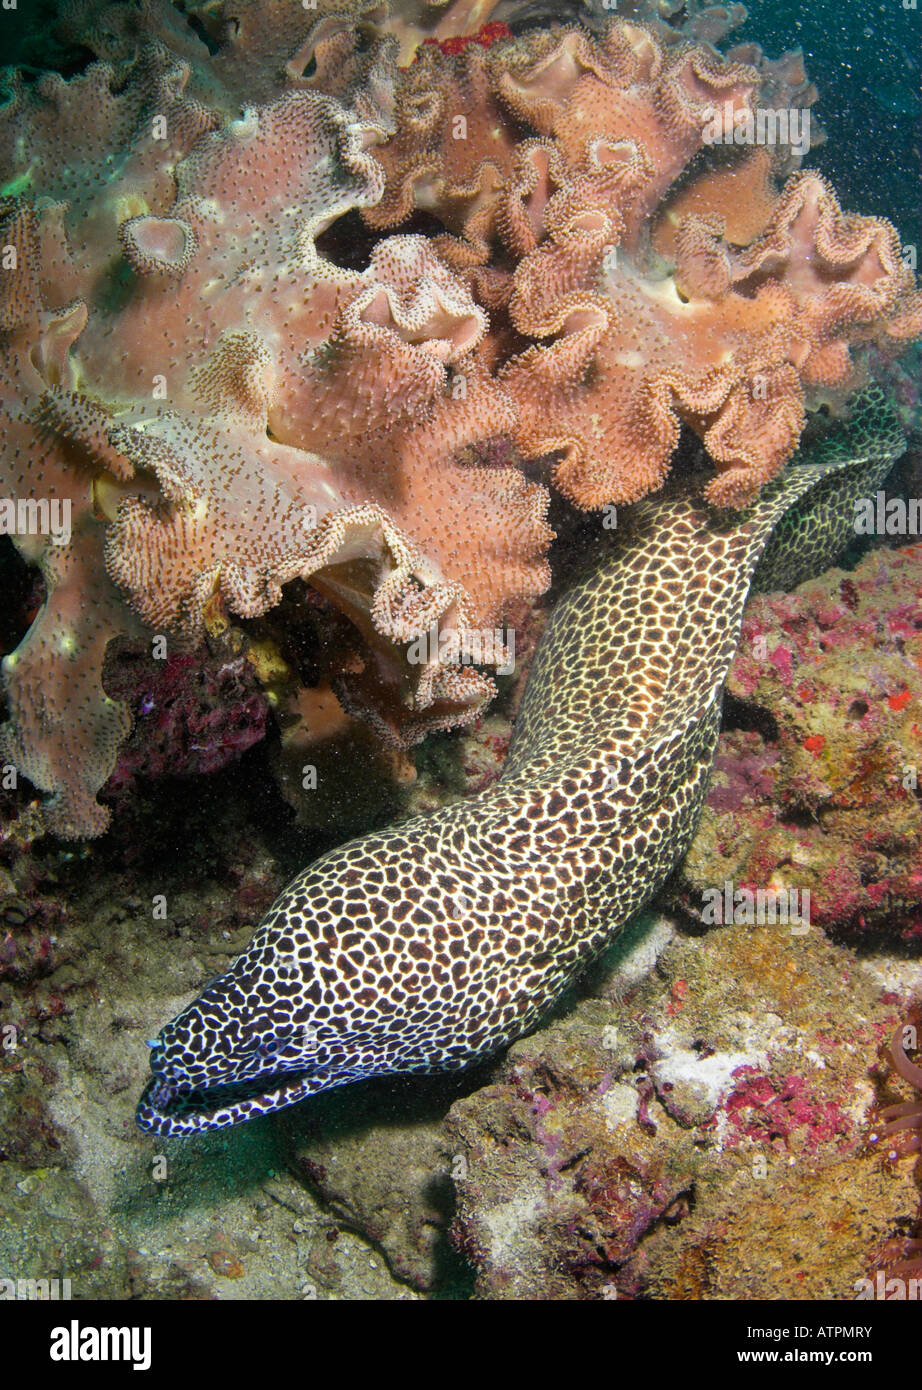 Honeycombe moray eel Gymnothorax favagineus under Soft coral Sarcophyton sp Daymaniyat Islands Gulf of Oman Stock Photo